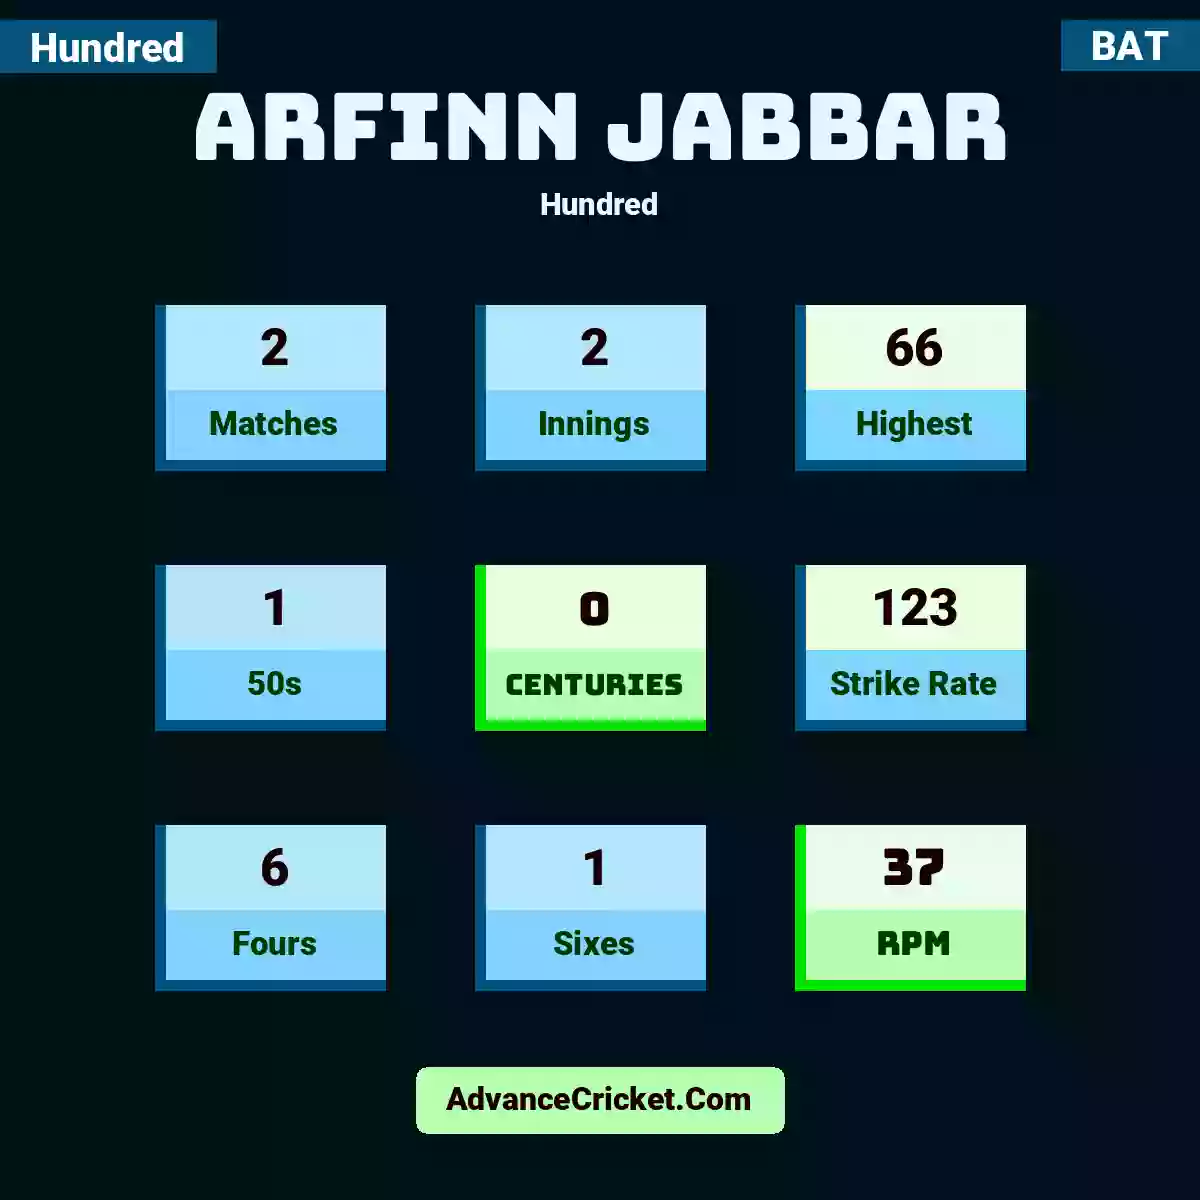 Arfinn Jabbar Hundred , Arfinn Jabbar played 2 matches, scored 66 runs as highest, 1 half-centuries, and 0 centuries, with a strike rate of 123. A.Jabbar hit 6 fours and 1 sixes, with an RPM of 37.